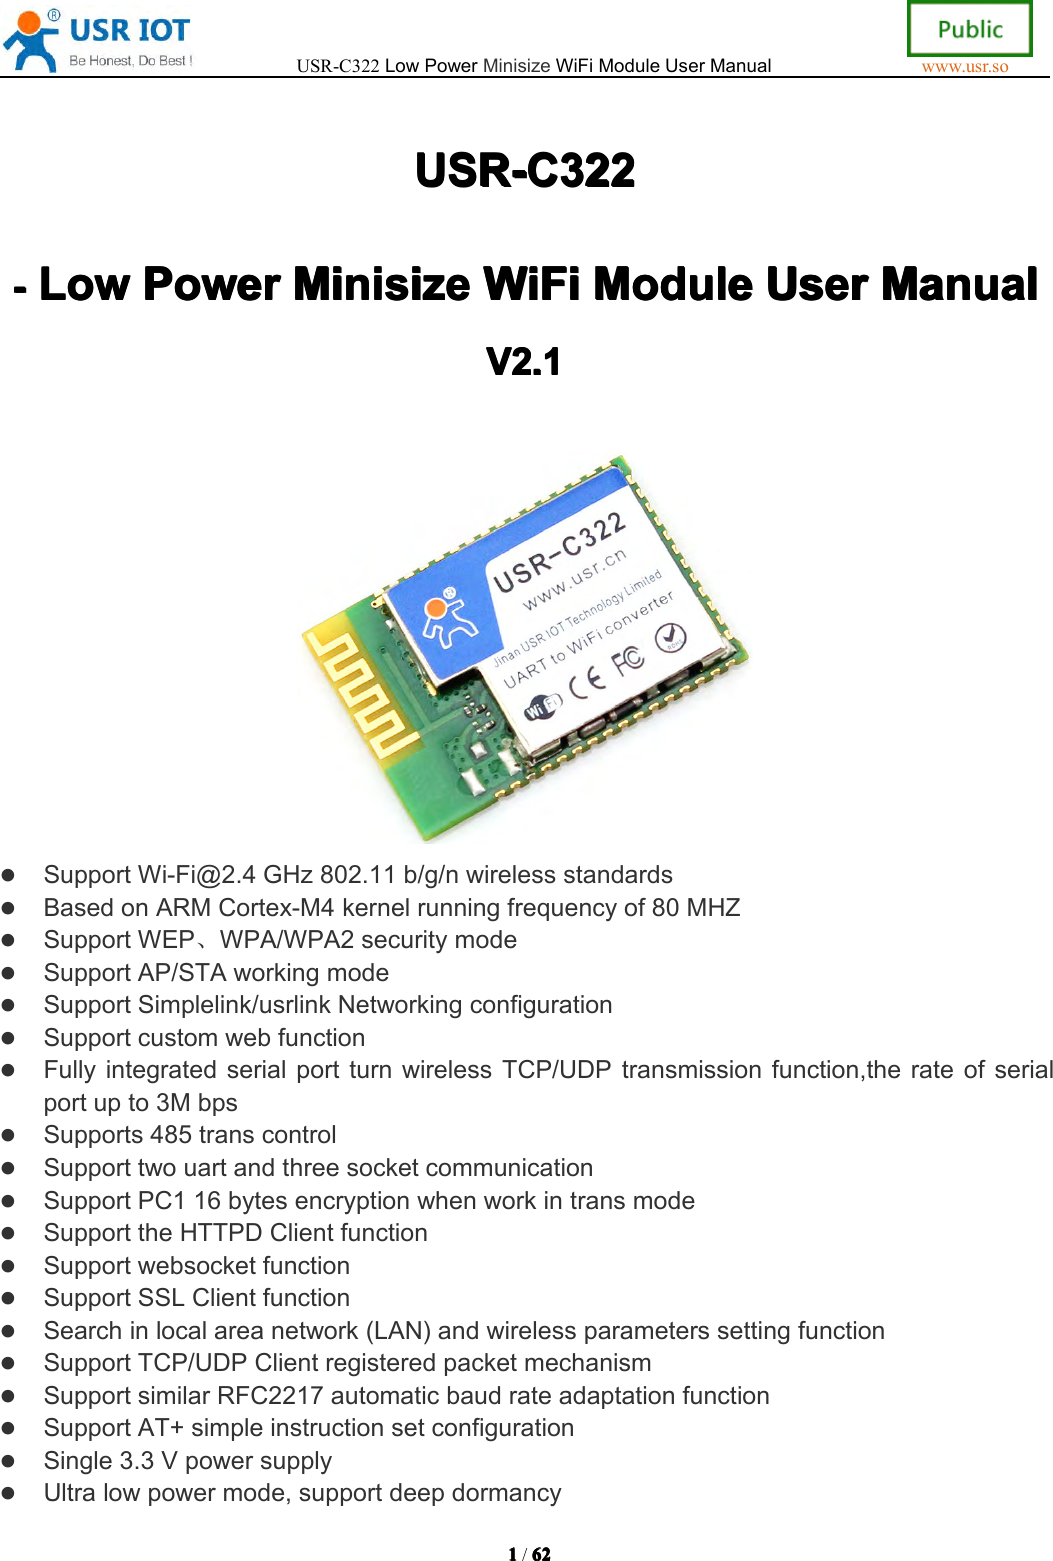 USR-C322LowPowerMinisizeWiFiModuleUserManualwww.usr.so1111/6262 62 62USR-C322 USR-C322 USR-C322 USR-C322----Low Low Low LowPower Power Power PowerMinisize Minisize Minisize MinisizeWiFi WiFi WiFi WiFiModule Module Module ModuleUser User User UserManual Manual Manual ManualVVVV2. 2. 2. 2.1 111SupportWi-Fi@2.4GHz802.11b/g/nwirelessstandardsBasedonARMCortex-M4kernelrunningfrequencyof80MHZSupportWEP、WPA/WPA2securitymodeSupportAP/STAworkingmodeSupportSimplelink/usrlinkNetworkingconfigurationSupportcustomwebfunctionFullyintegratedserialportturnwirelessTCP/UDPtransmissionfunction,therateofserialportupto3MbpsSupports485transcontrolSupporttwouartandthreesocketcommunicationSupportPC116bytesencryptionwhenworkintransmodeSupporttheHTTPDClientfunctionSupportwebsocketfunctionSupportSSLClientfunctionSearchinlocalareanetwork(LAN)andwirelessparameterssettingfunctionSupportTCP/UDPClientregisteredpacketmechanismSupportsimilarRFC2217automaticbaudrateadaptationfunctionSupportAT+simpleinstructionsetconfigurationSingle3.3VpowersupplyUltralowpowermode,supportdeepdormancy